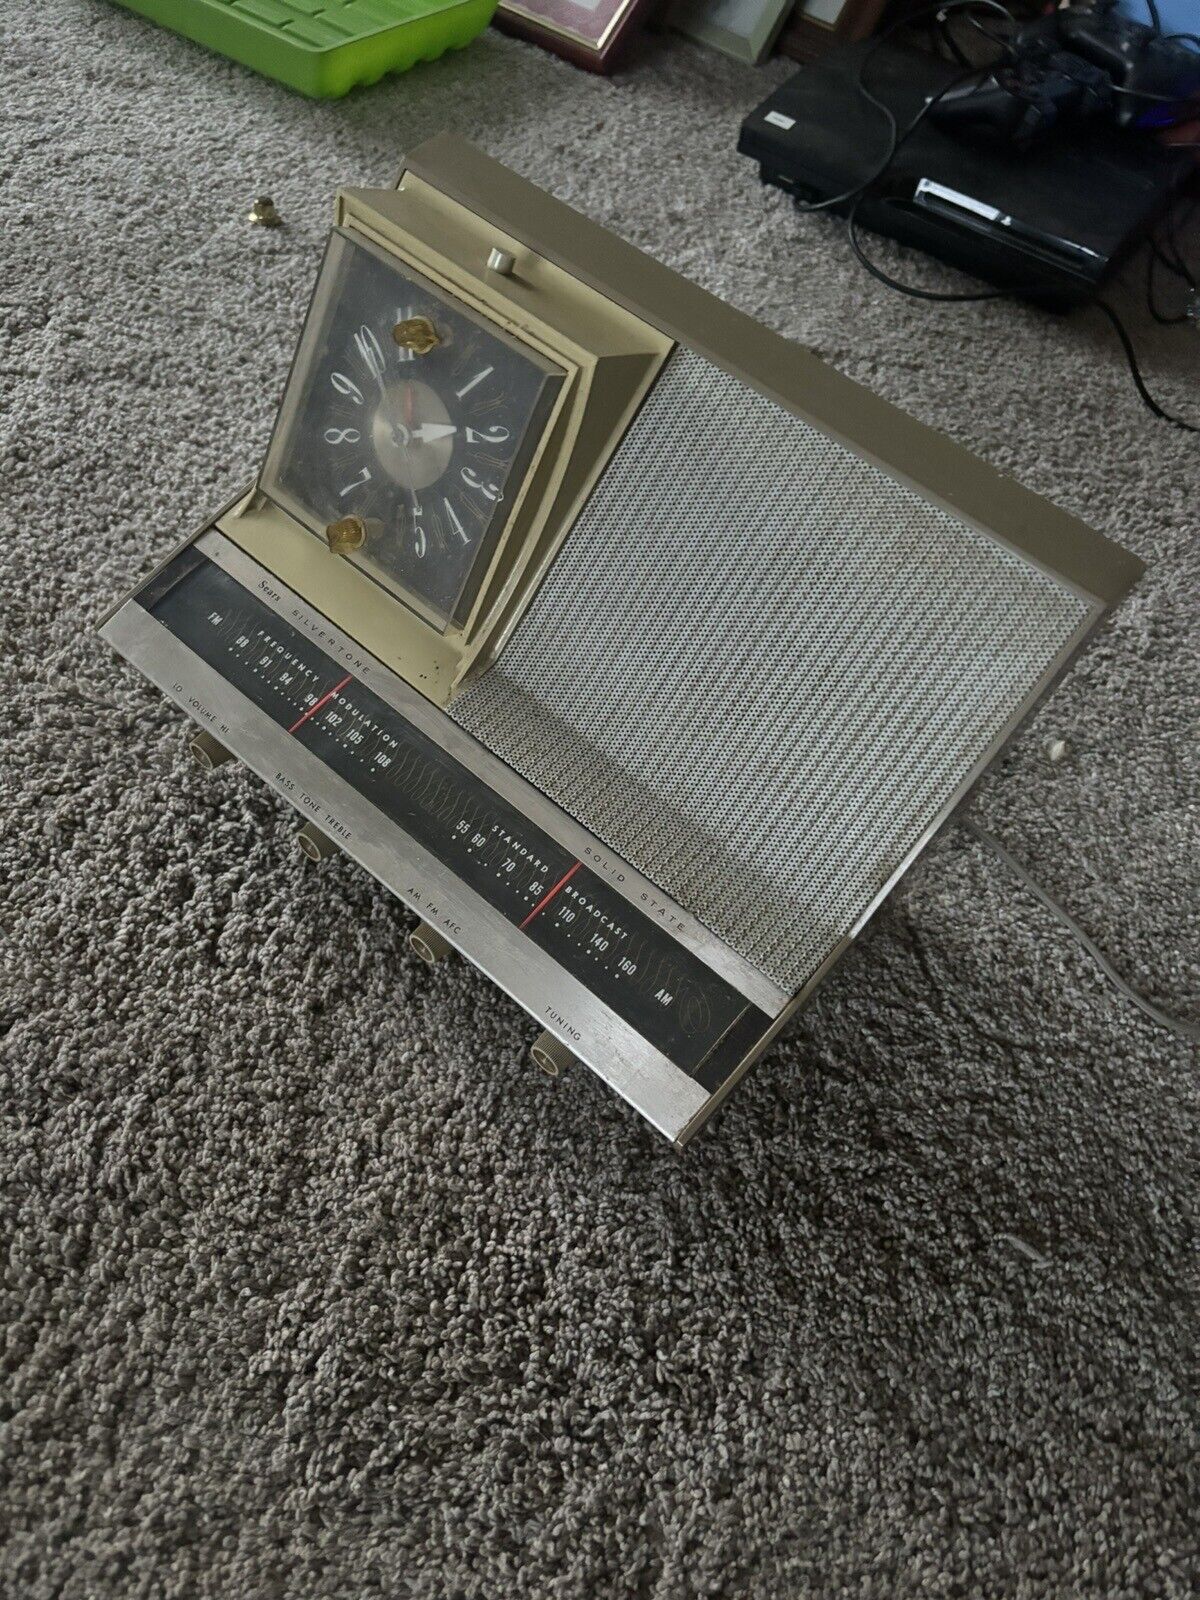 Sears Radio Alarm Clock 1967